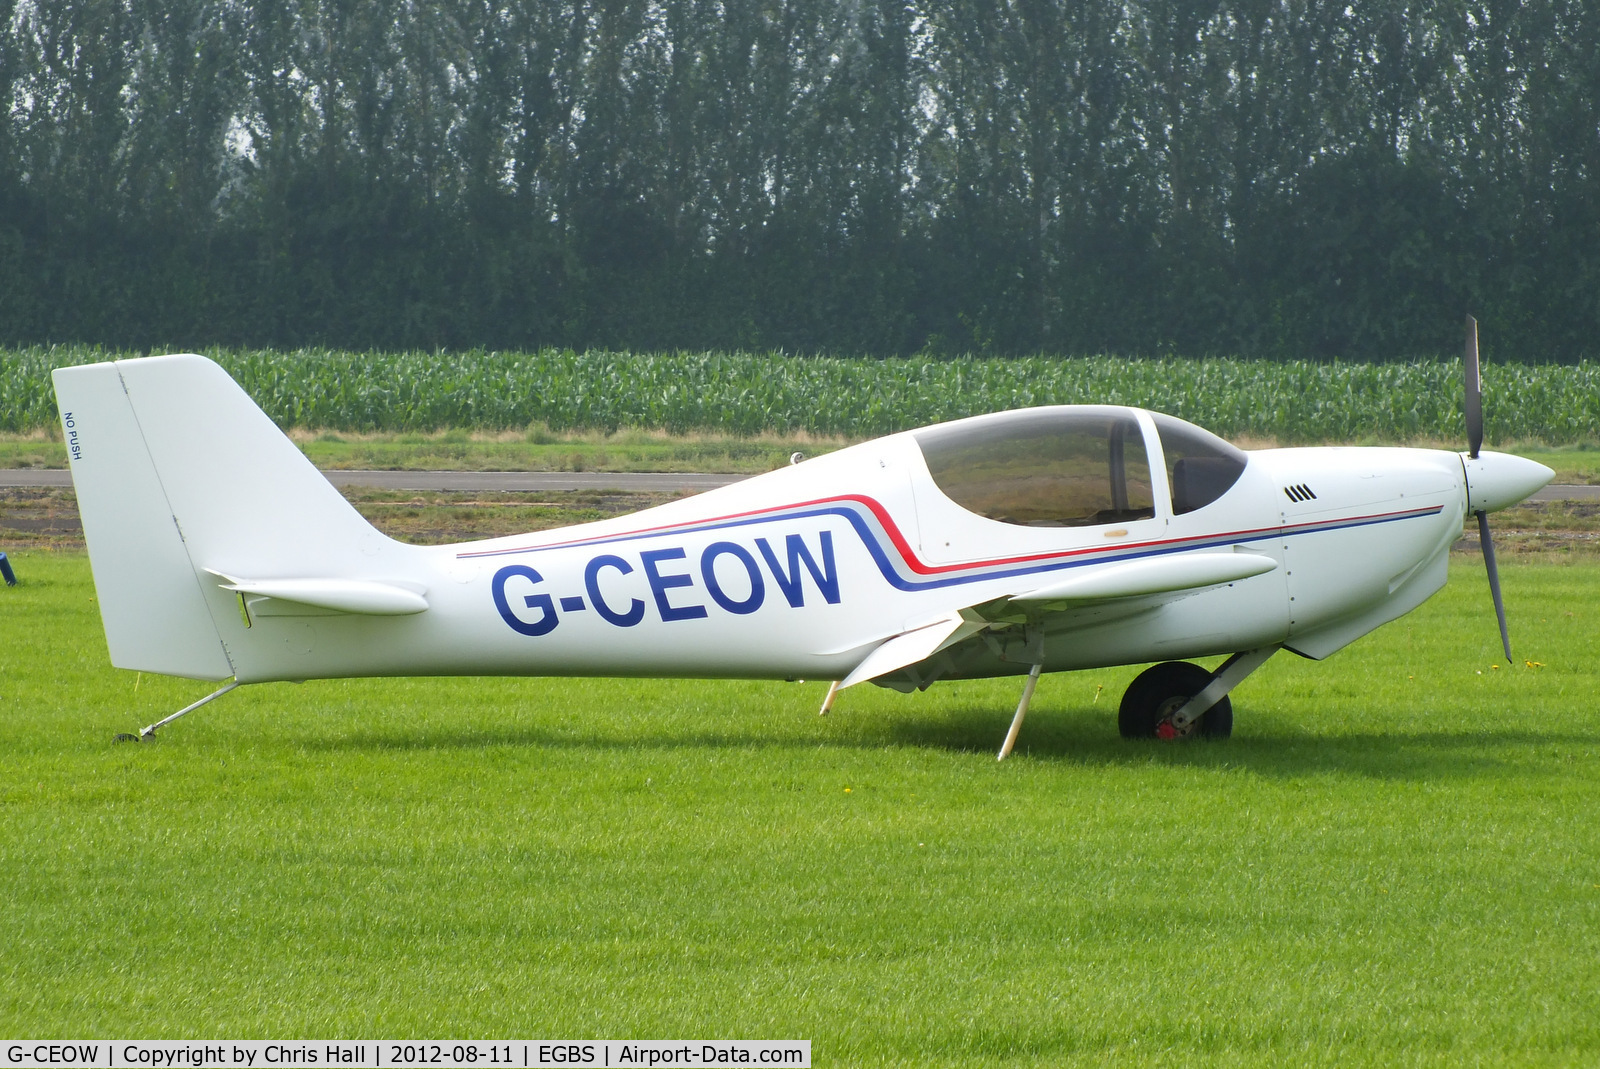 G-CEOW, 2007 Europa XS Monowheel C/N PFA 247-13877, at Shobdon Airfield, Herefordshire